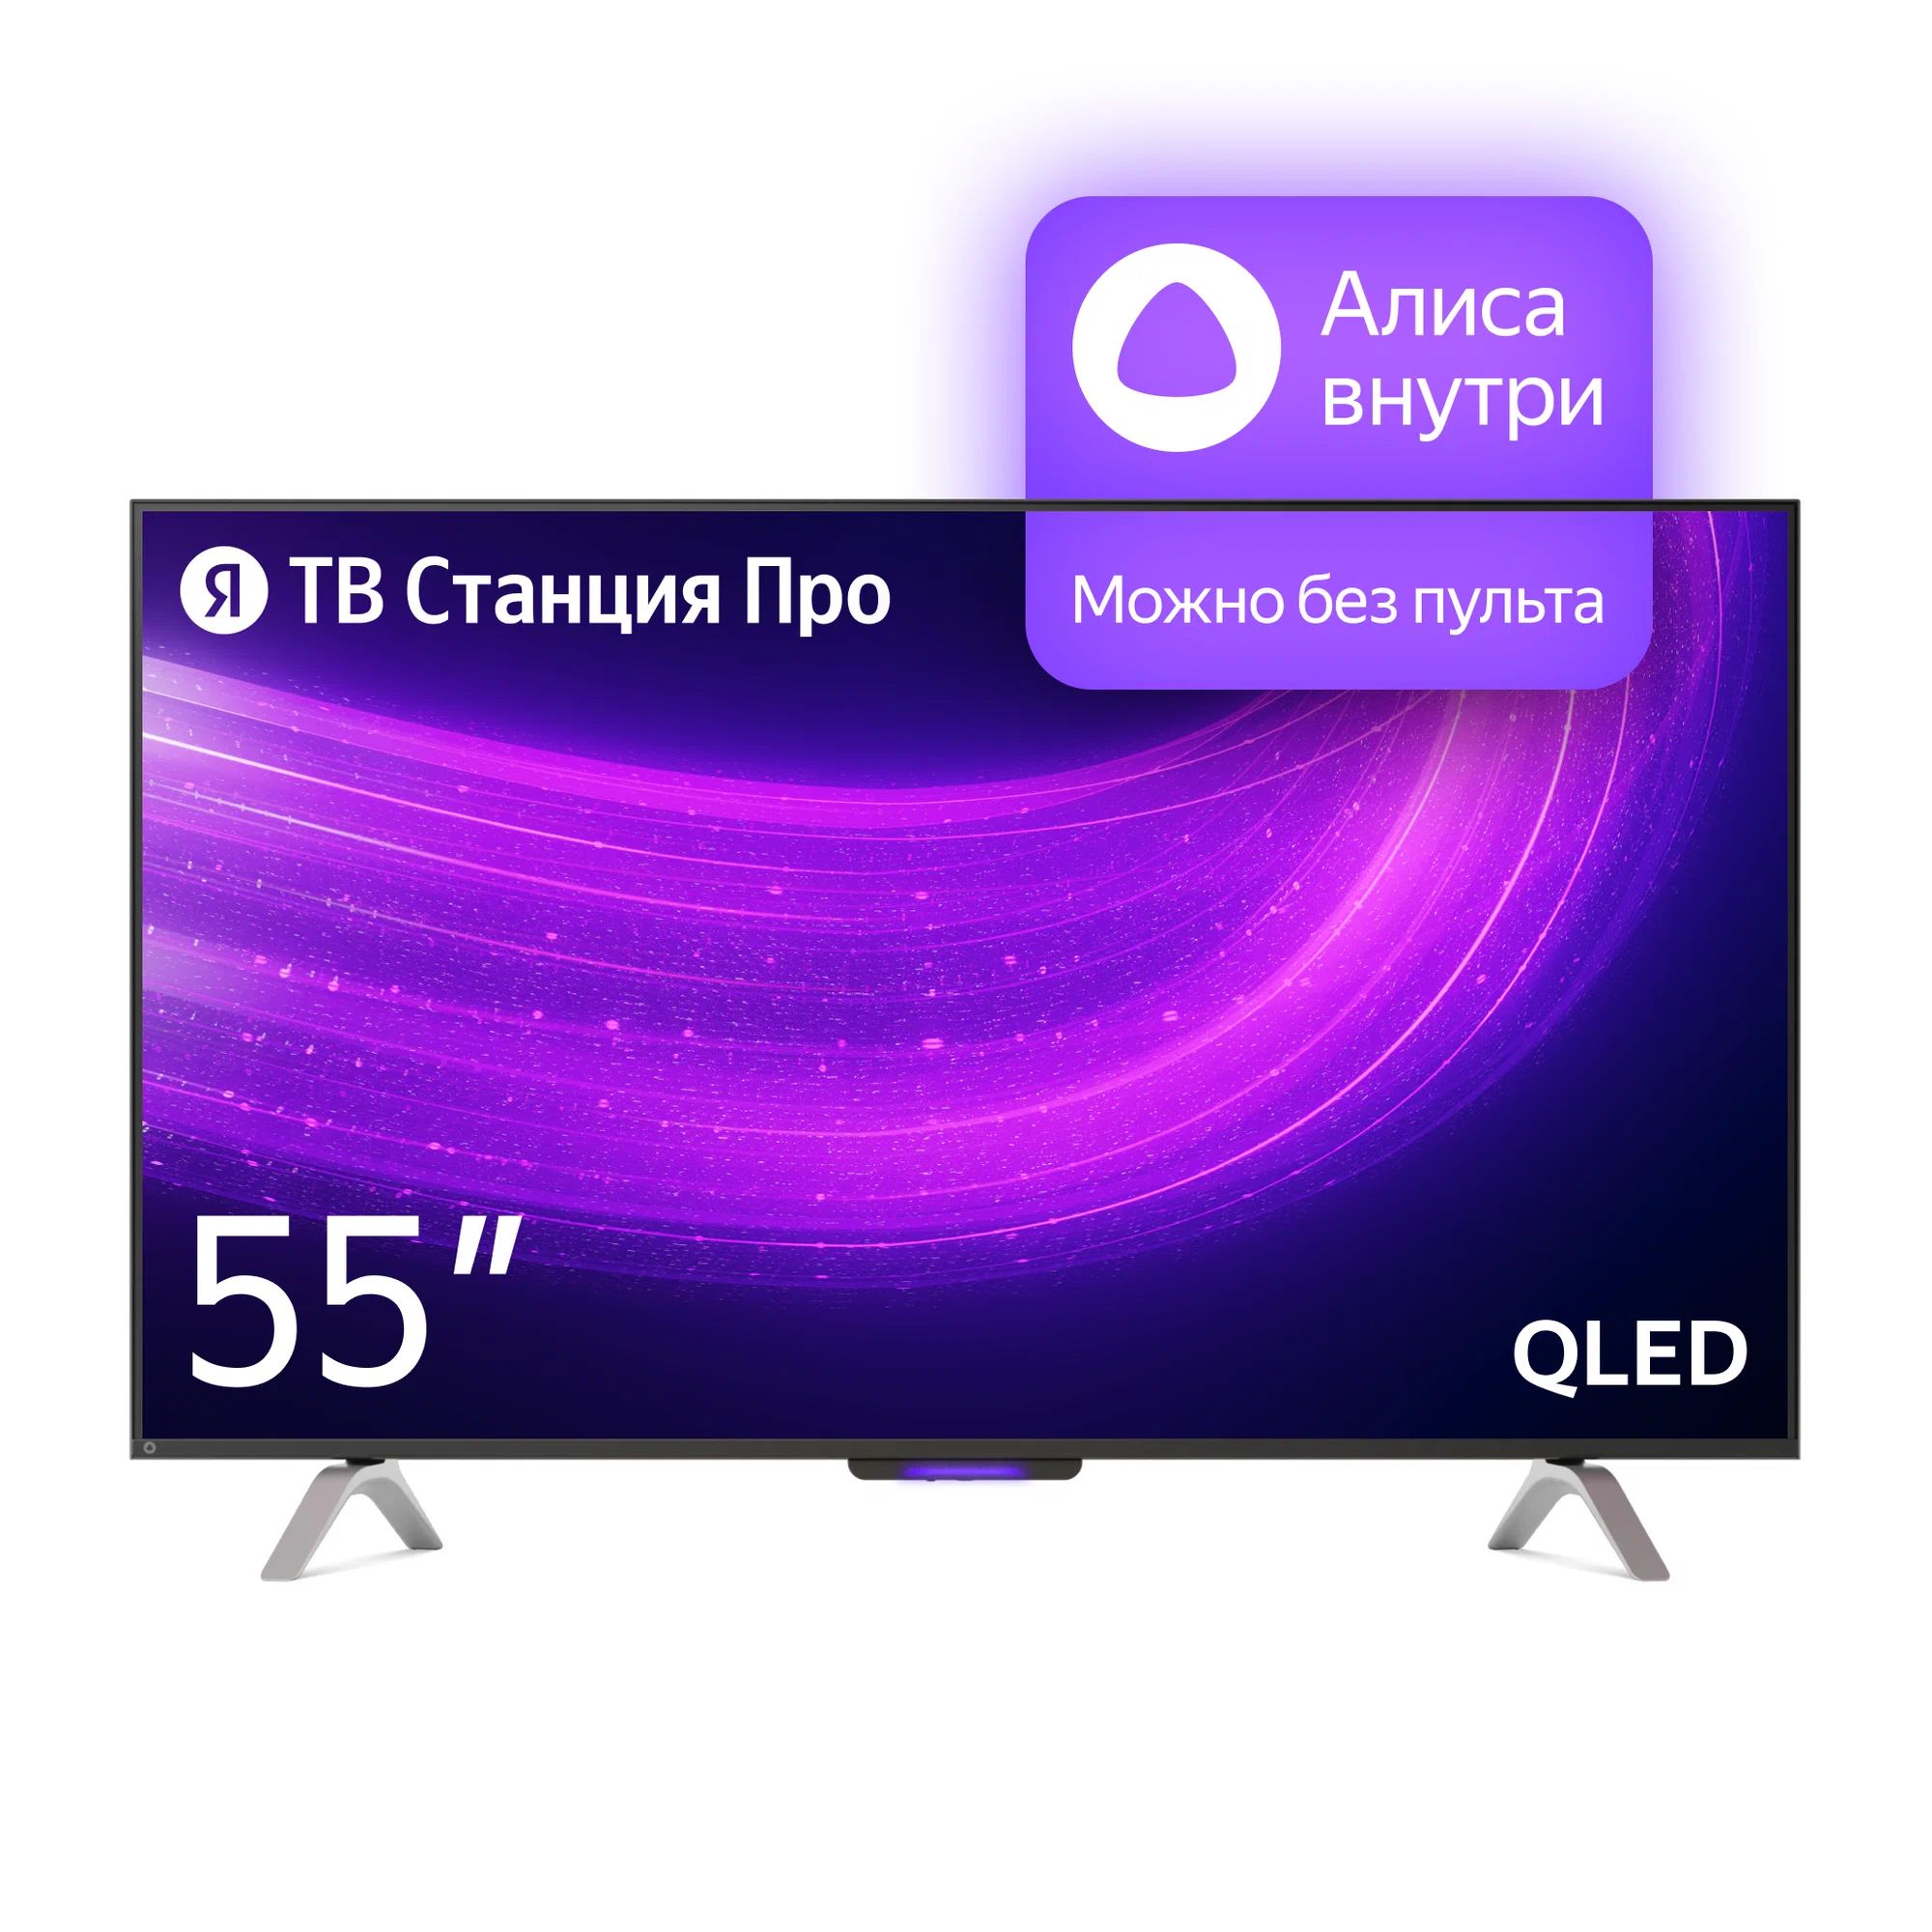 Телевизор Яндекс YNDX-00101 PRO Тв станция с Алисой 55 телевизор яндекс 55 умный телевизор с алисой yndx 00073